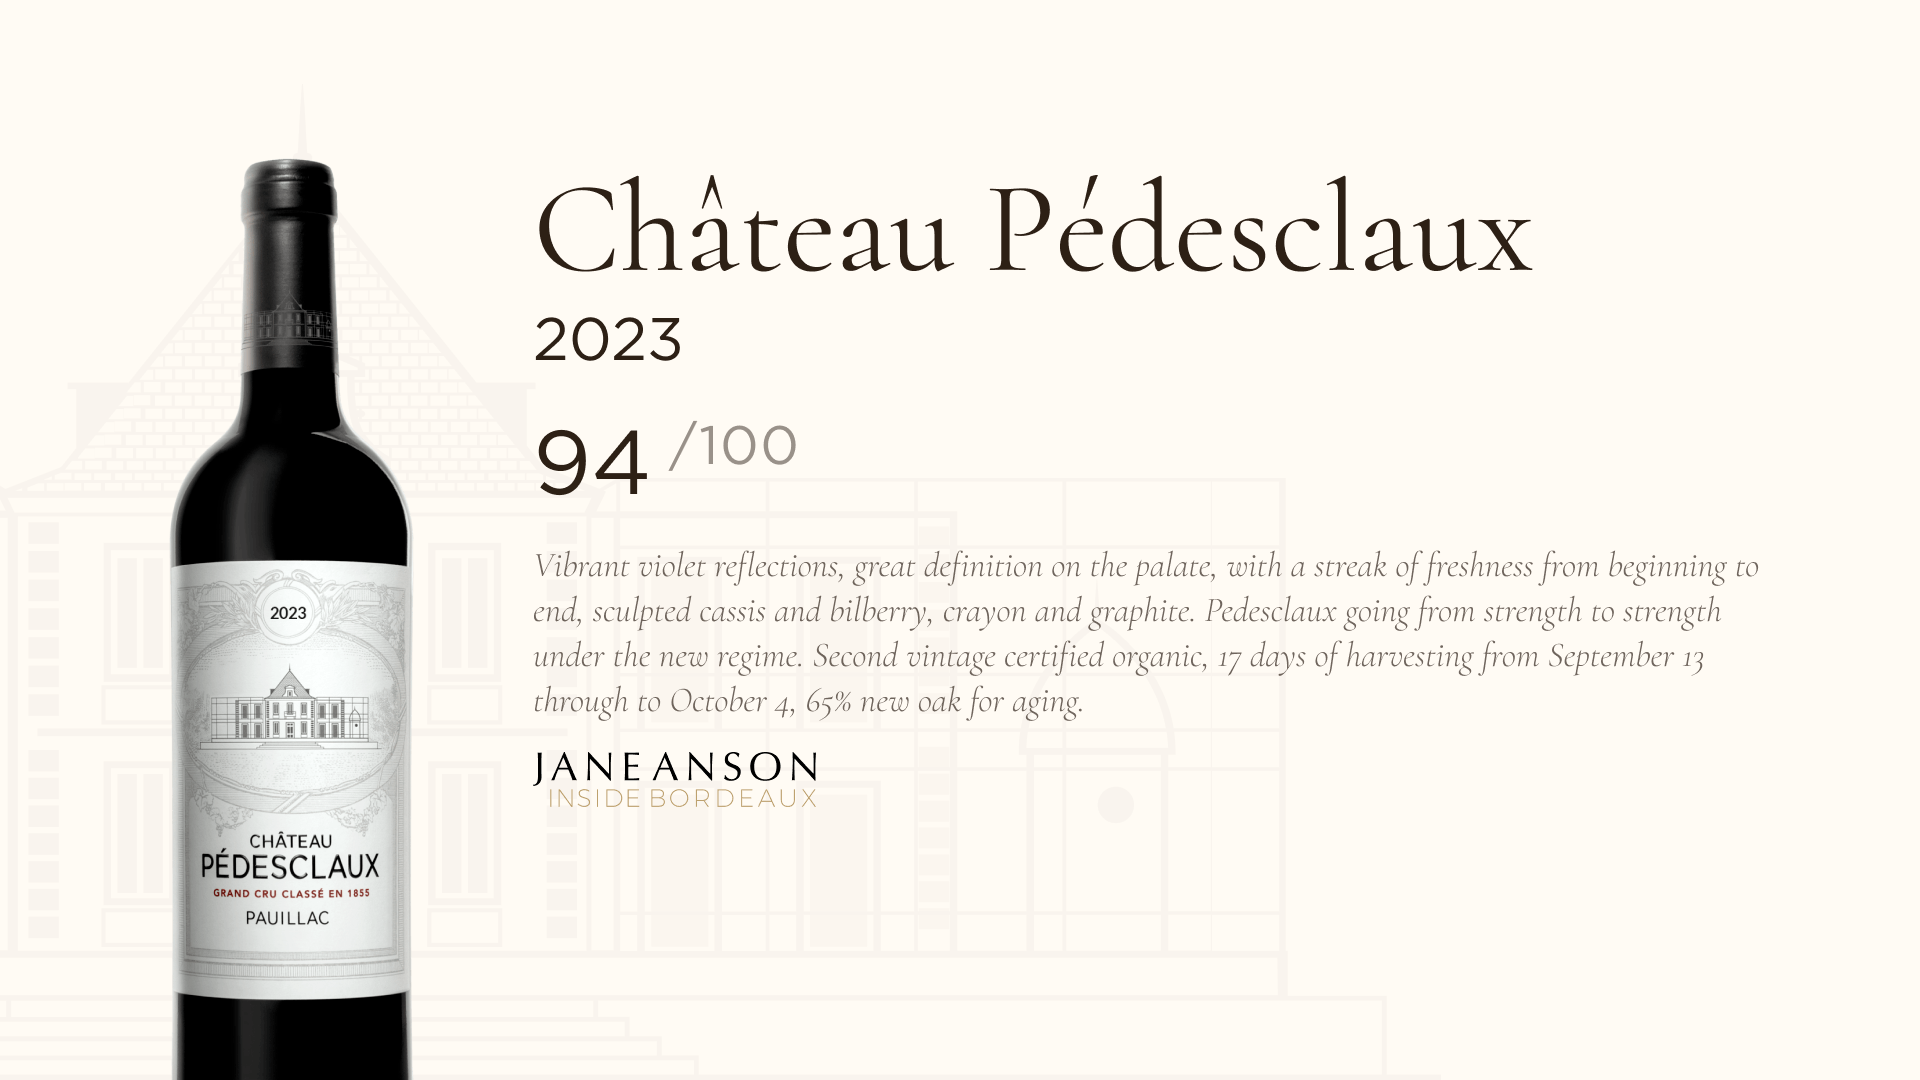 2023 is now available - Chateau Pedesclaux